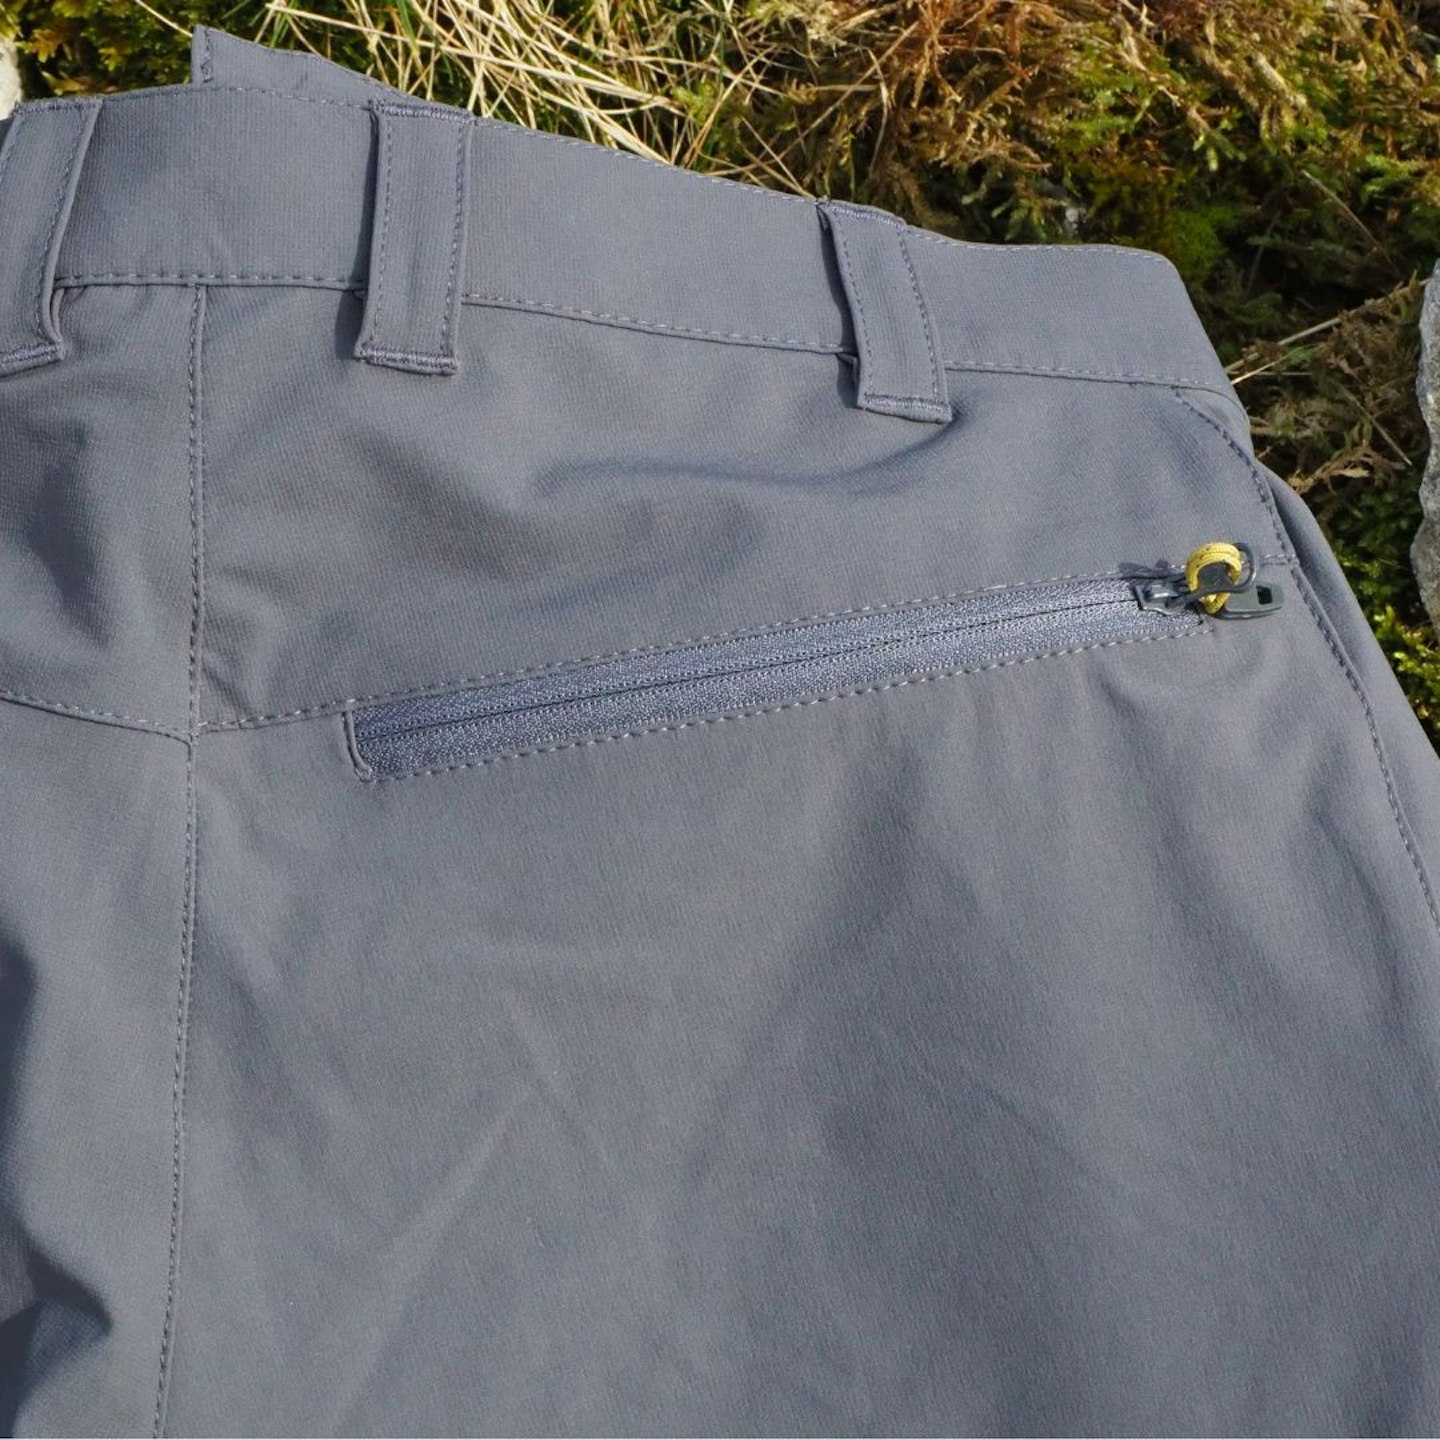 Keela Bidean Shorts rear pocket